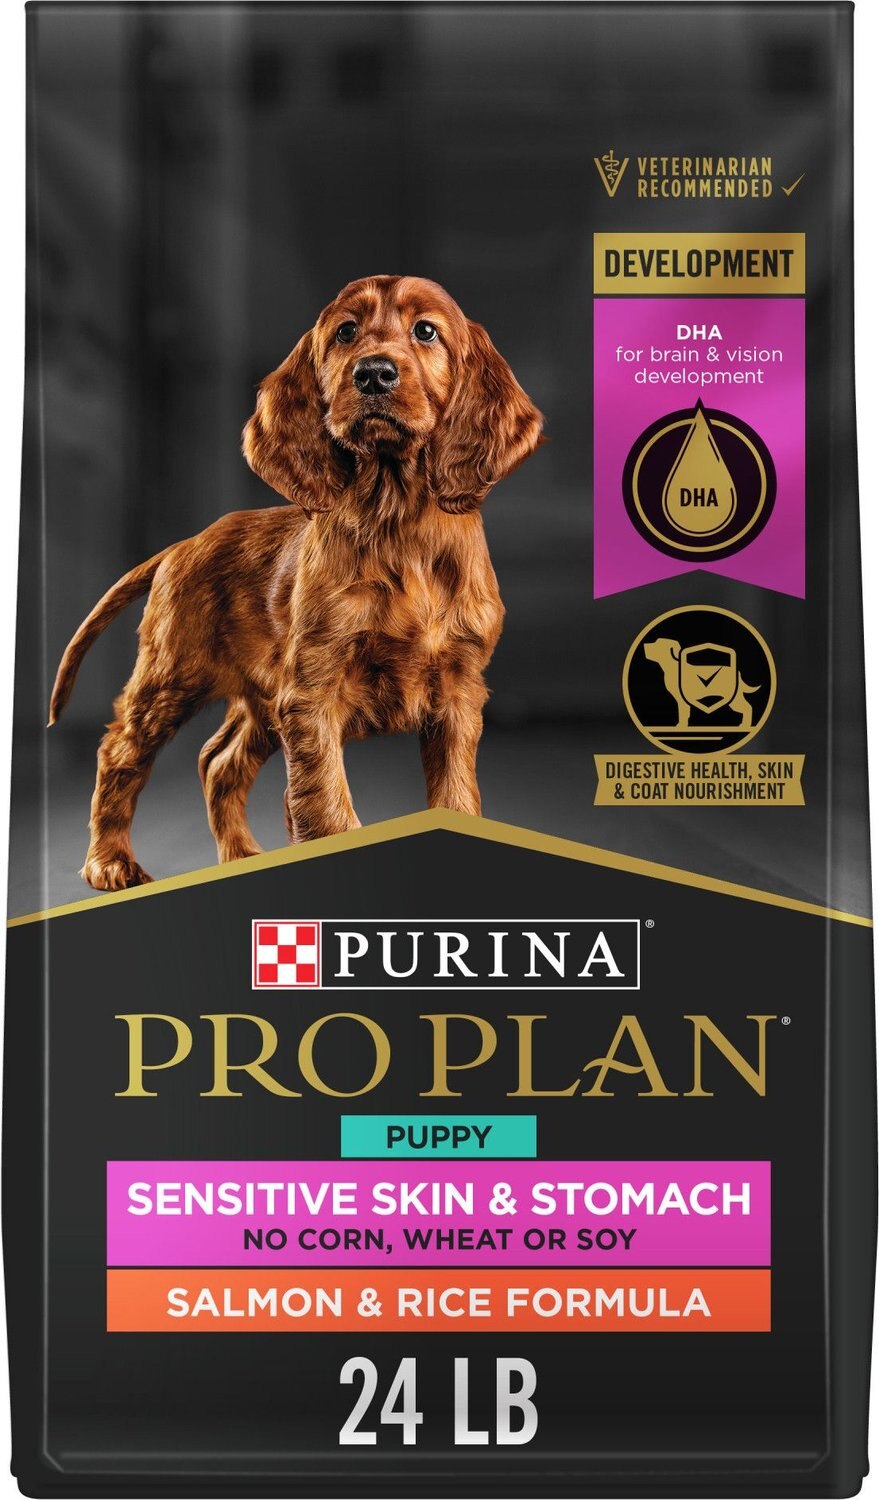 Purina Pro Plan Puppy Sensitive Skin & Stomach Salmon